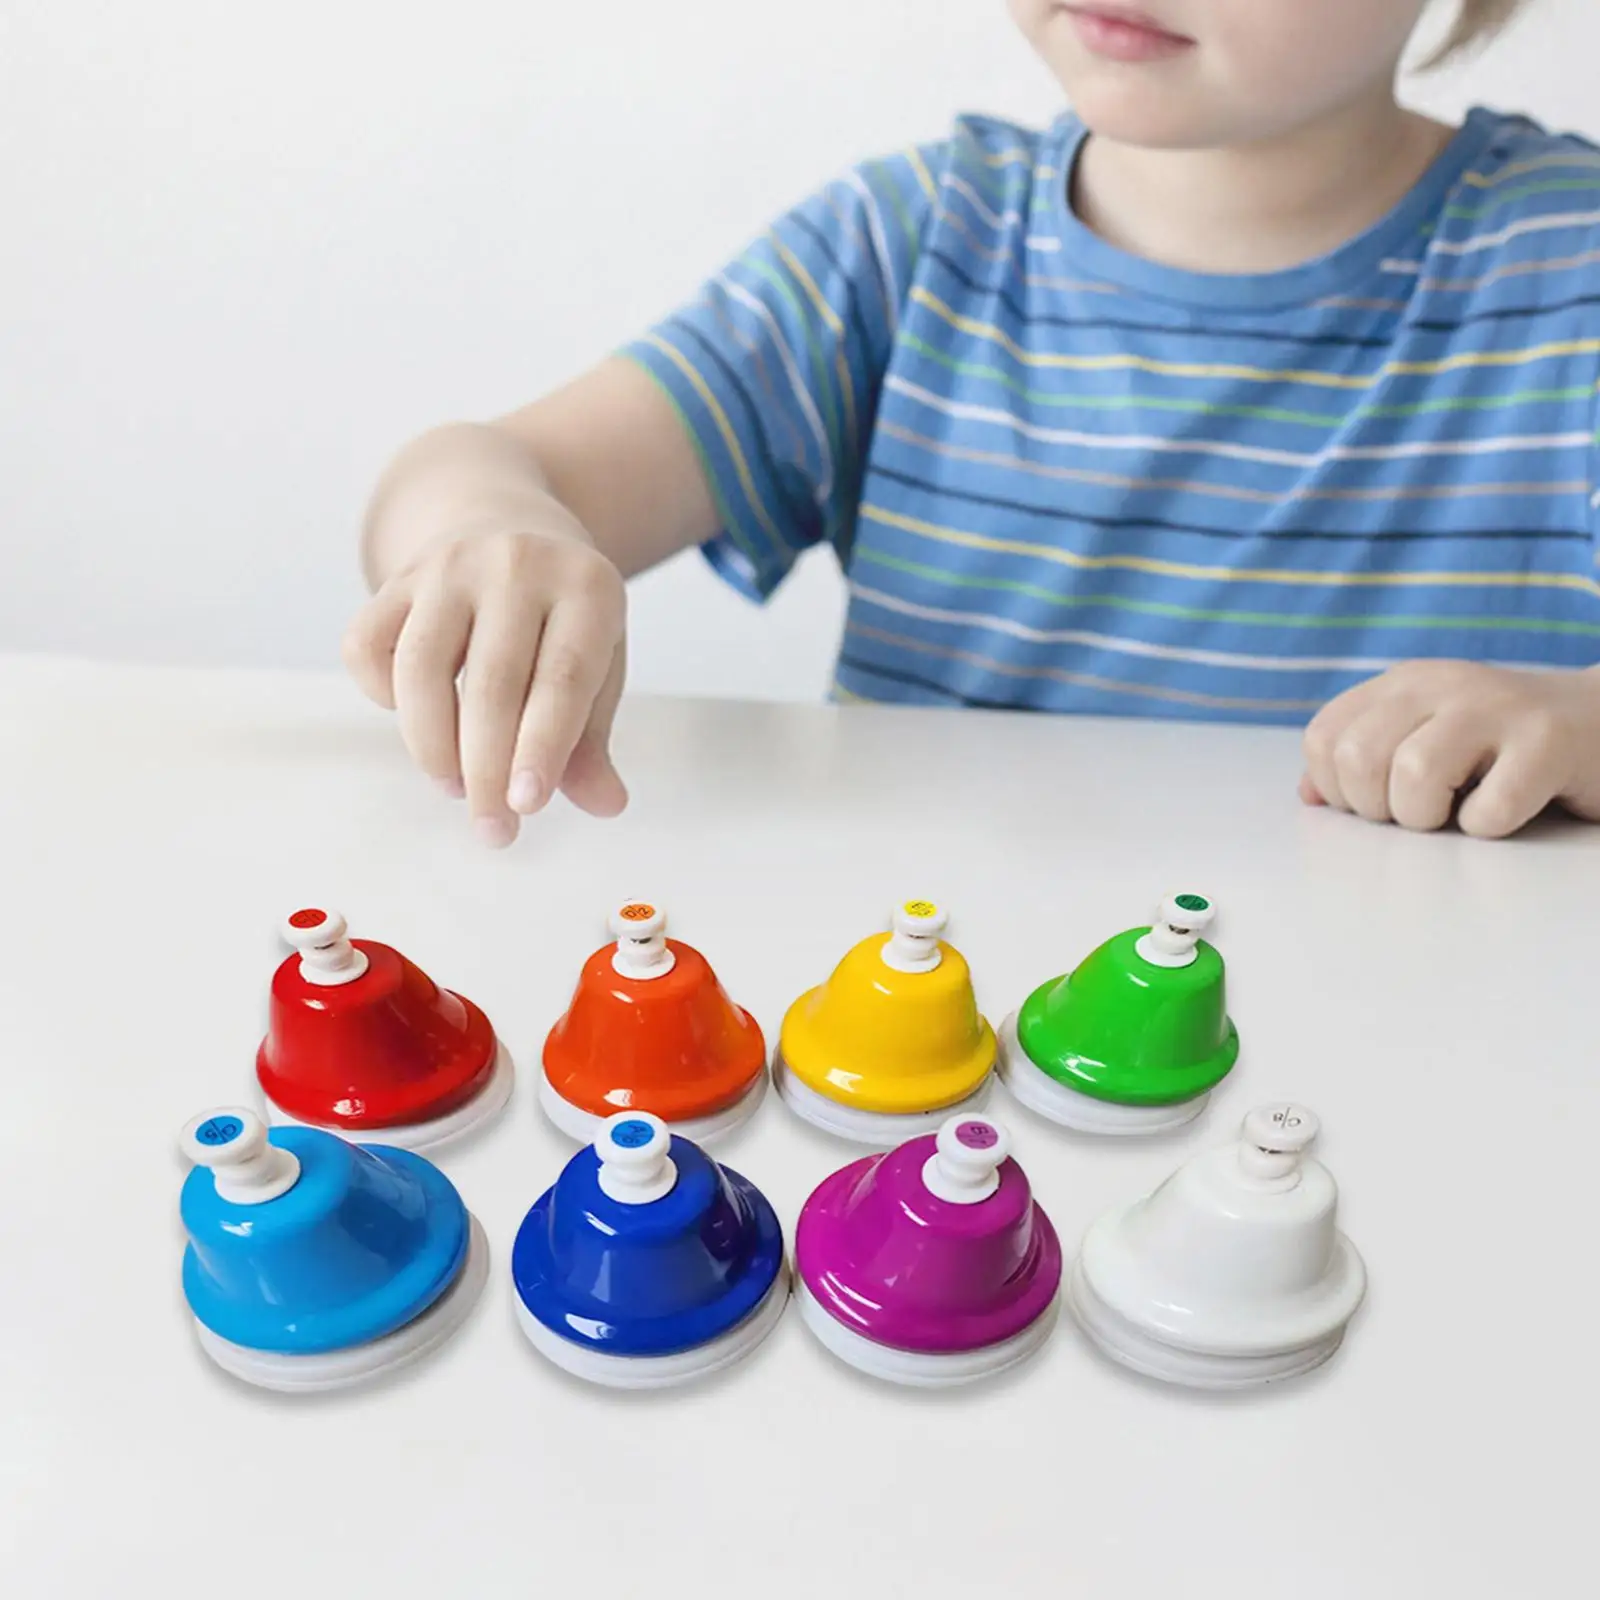 Desk Bells for Kids Colorful Musical Learning Toys 8 Notes Desk Bells Birthday Gift Musical Teaching Kids Play Desk Bells